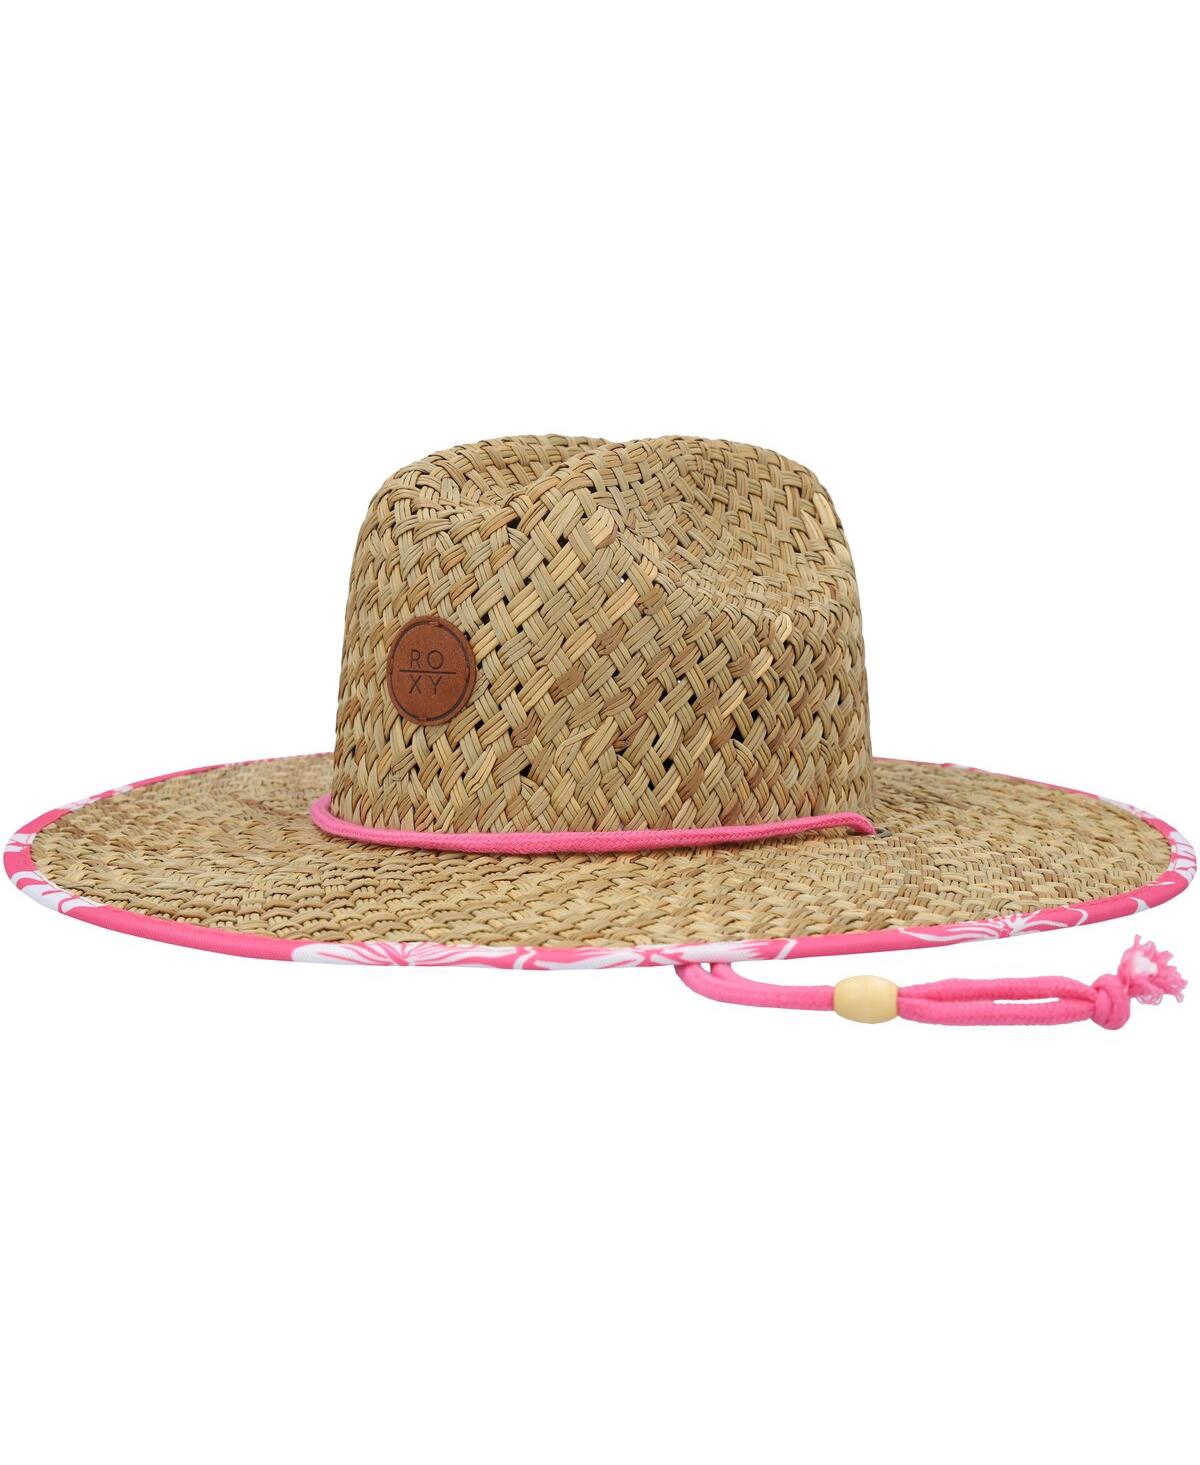 Roxy Women's  Natural Pina To My Colada Printed Straw Lifeguard Hat